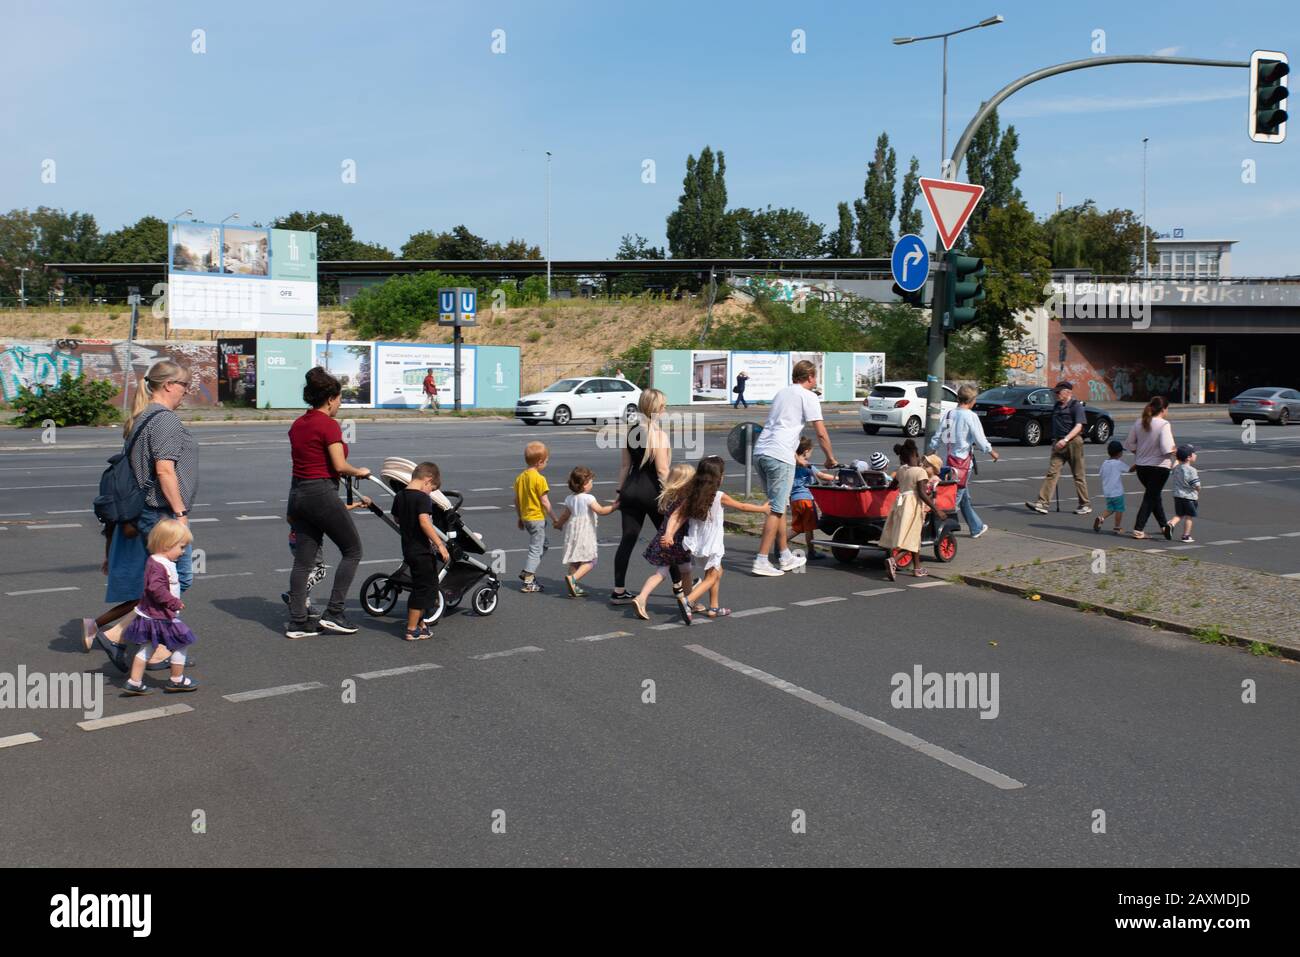 Gruppo di bambini con adulti, estate, Berlino, Germania. Un groupe d'enfants avec des adultes traversent une rue à Berlin, Allemagne. Foto Stock